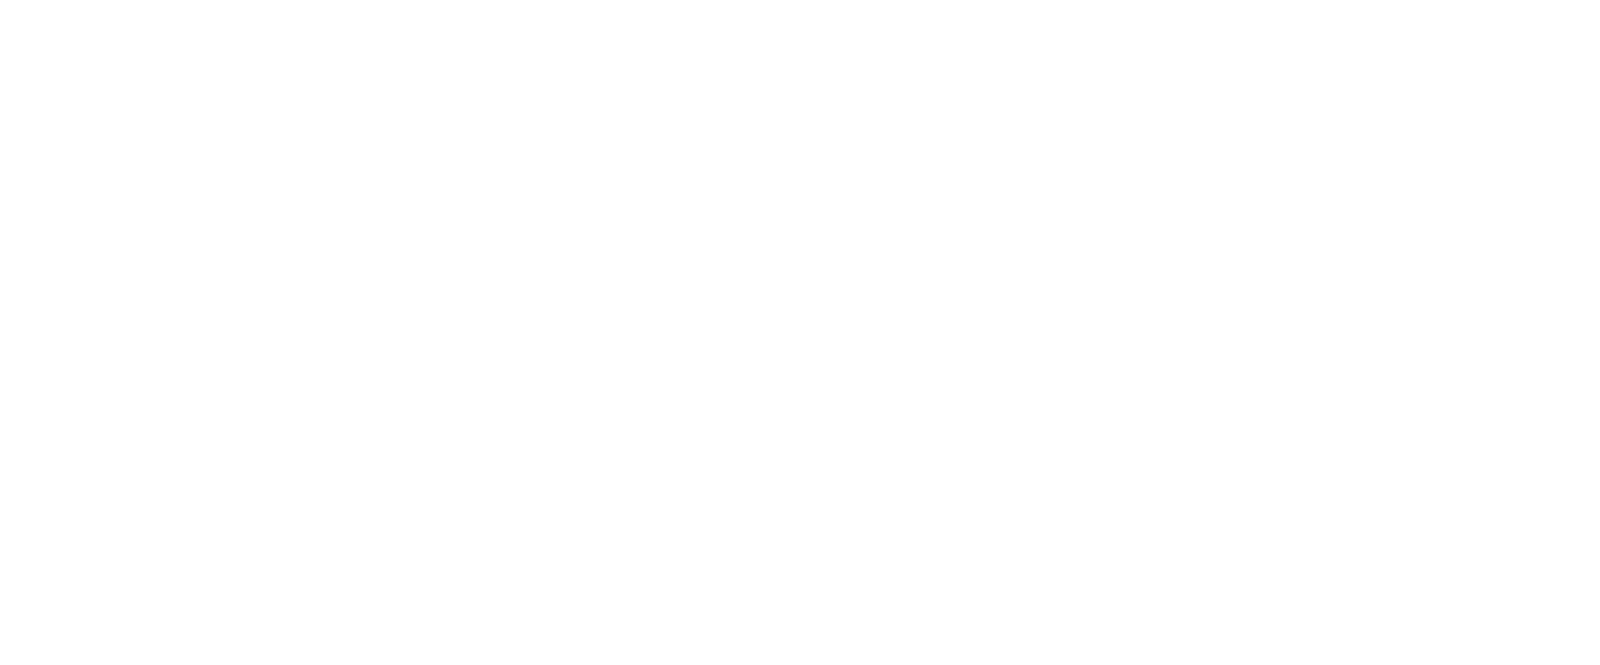 NARUMUGAI HERBALS